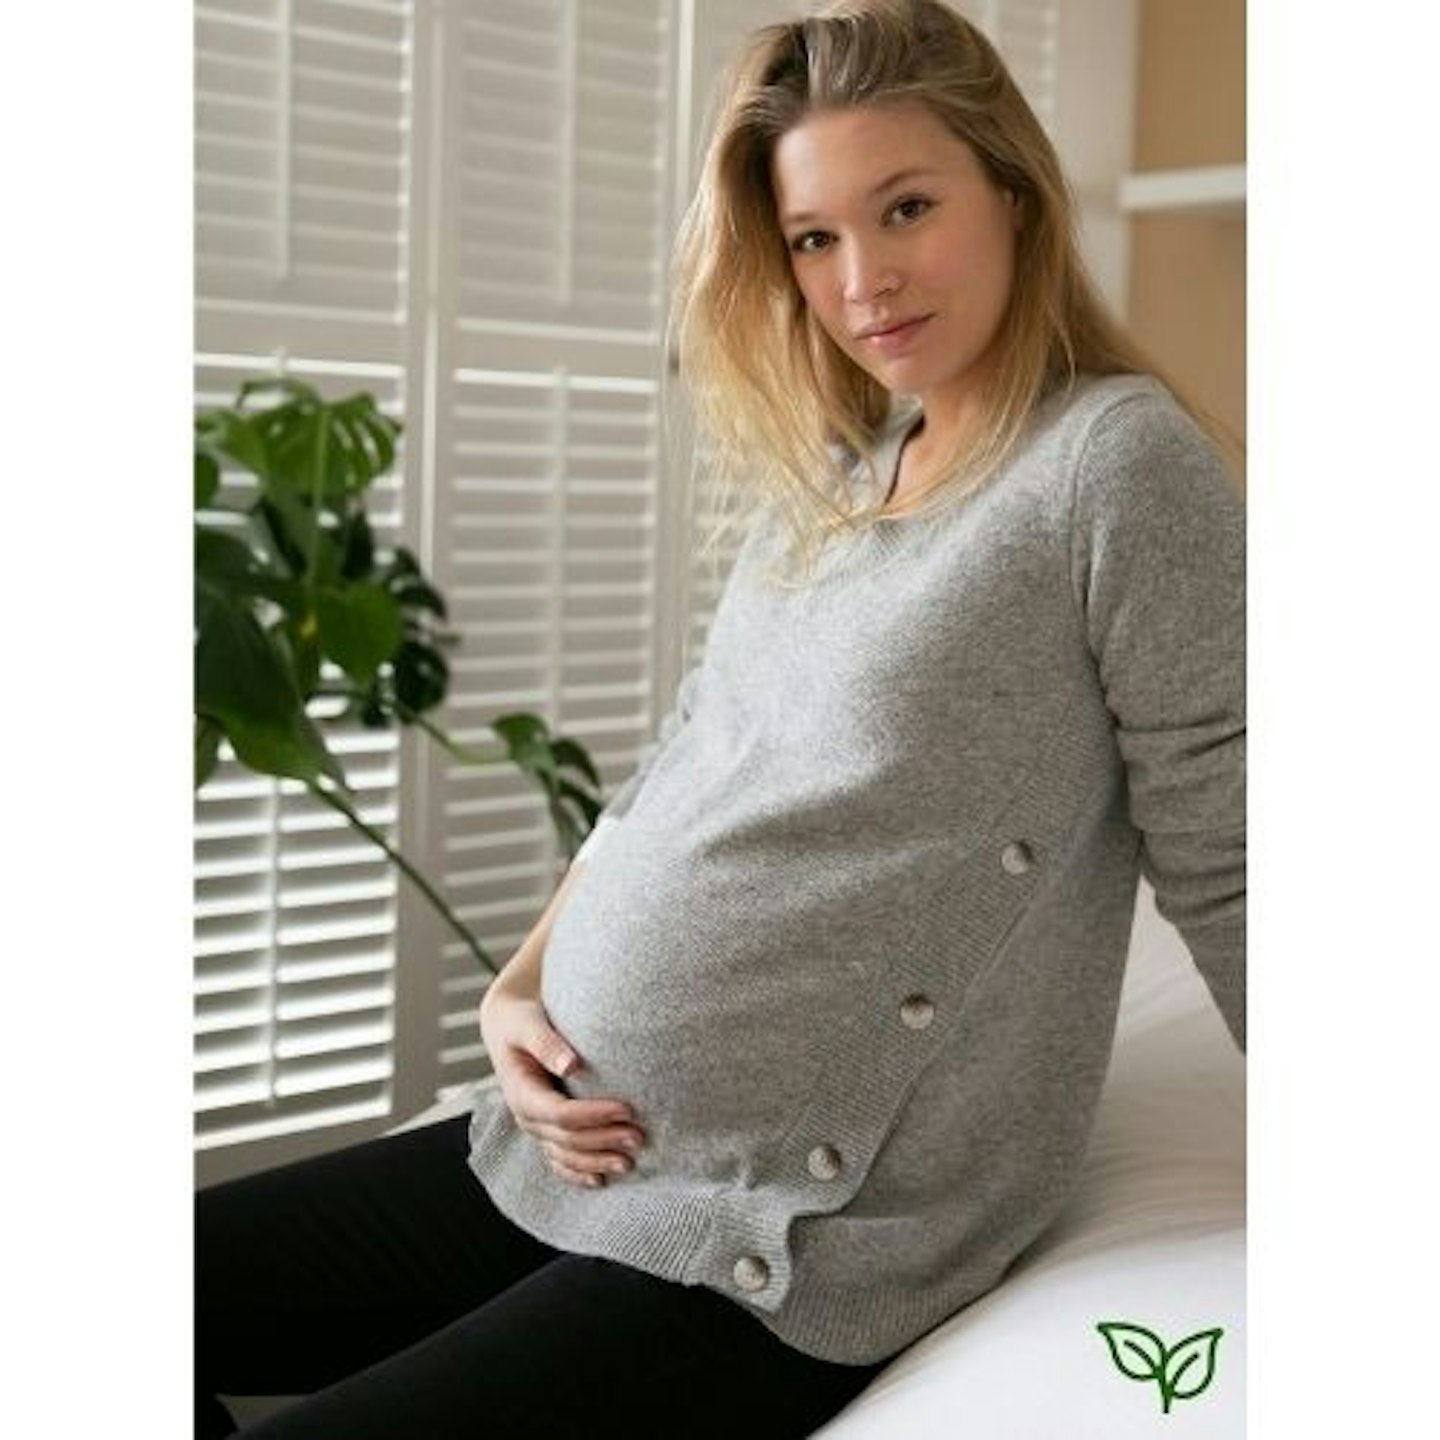 Abi Greencash maternity jumper